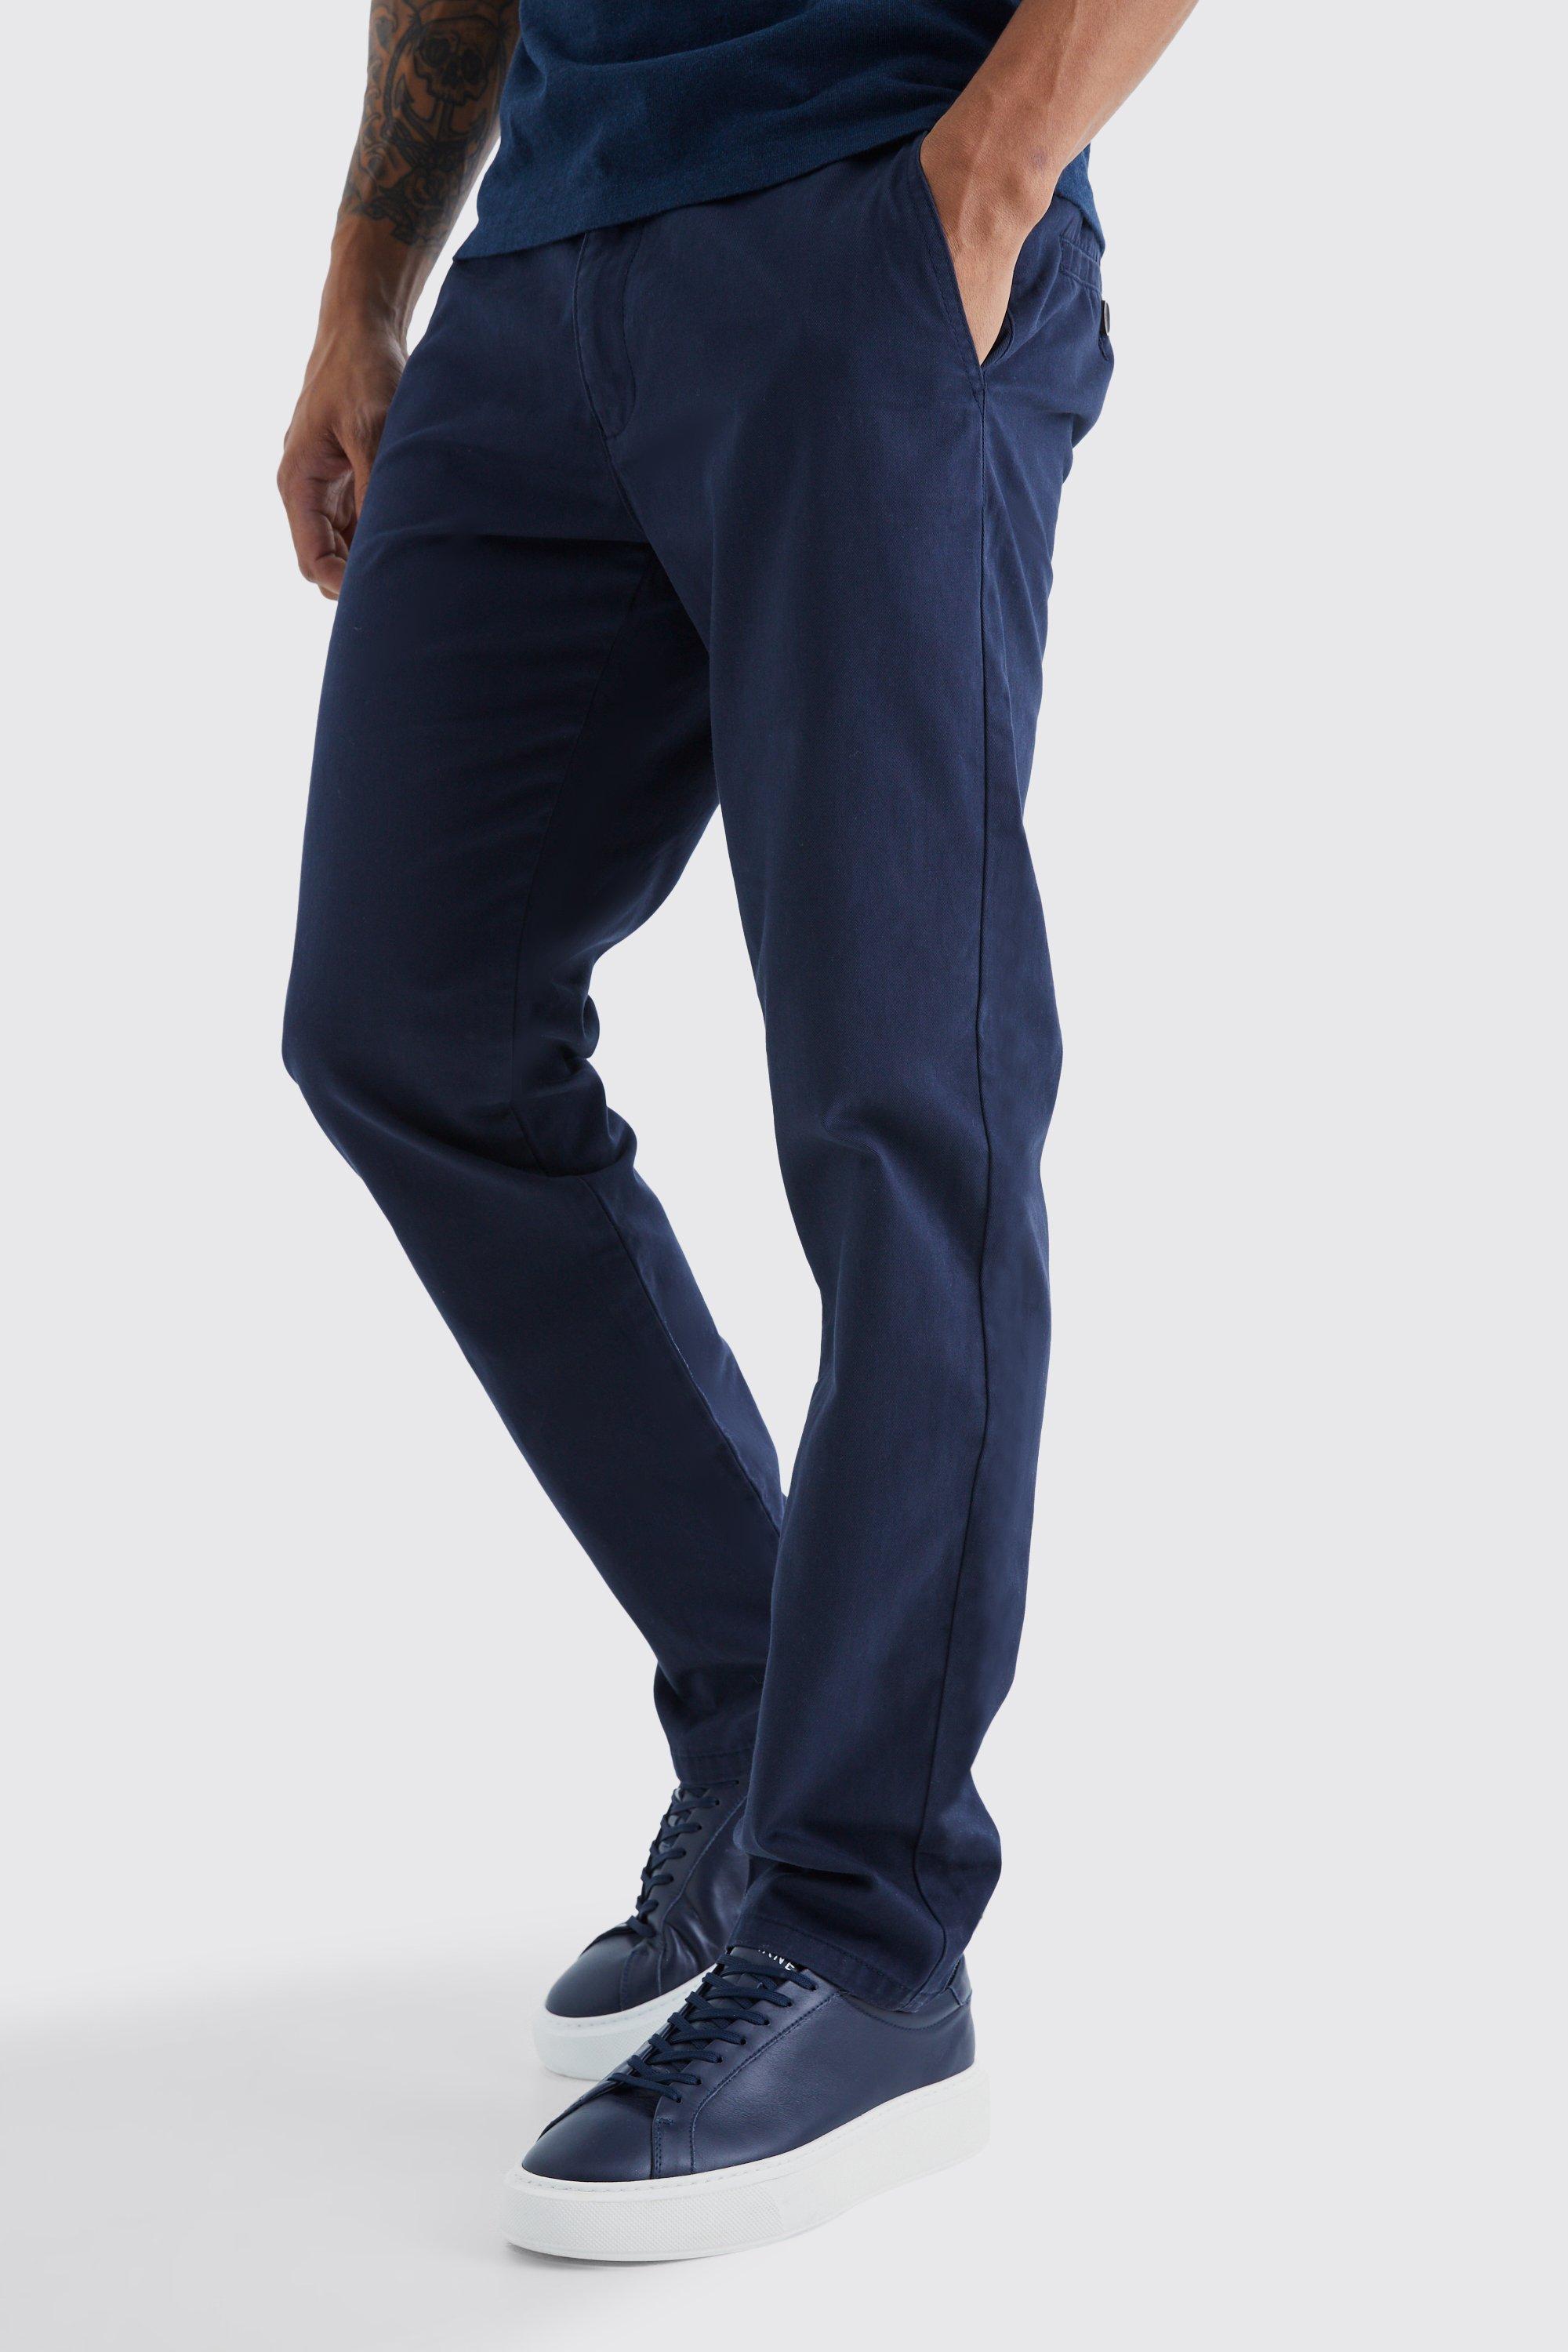 Image of Pantaloni Chino Slim Fit con vita fissa, Navy